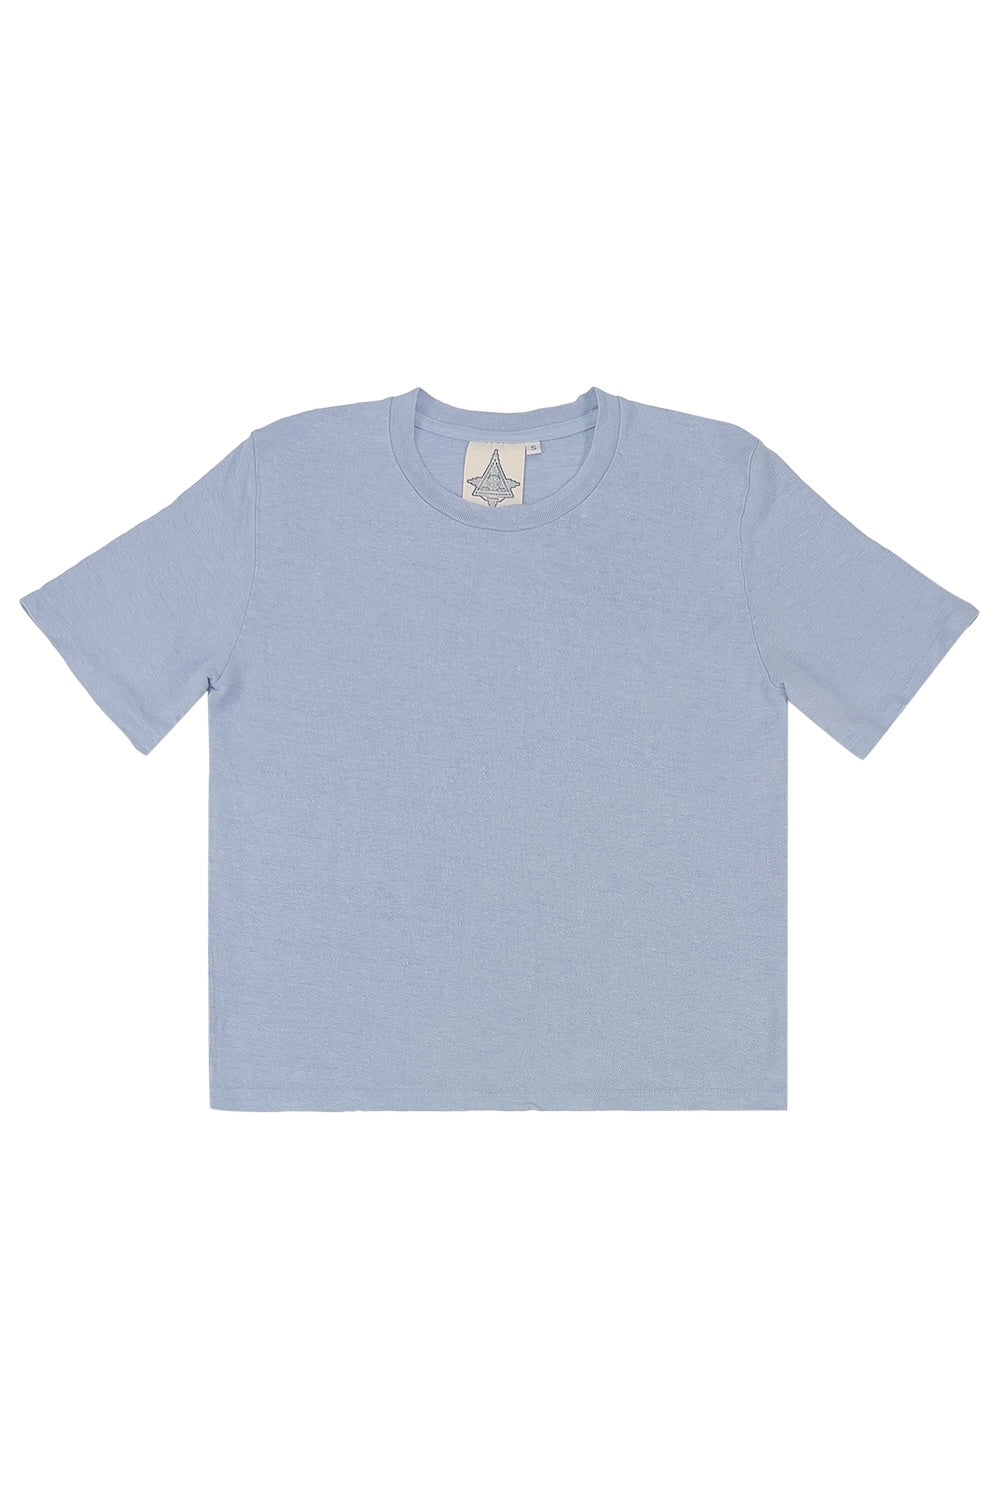 Dakota - 100% Hemp Cropped Tee | Jungmaven Hemp Clothing & Accessories / Color:Coastal Blue